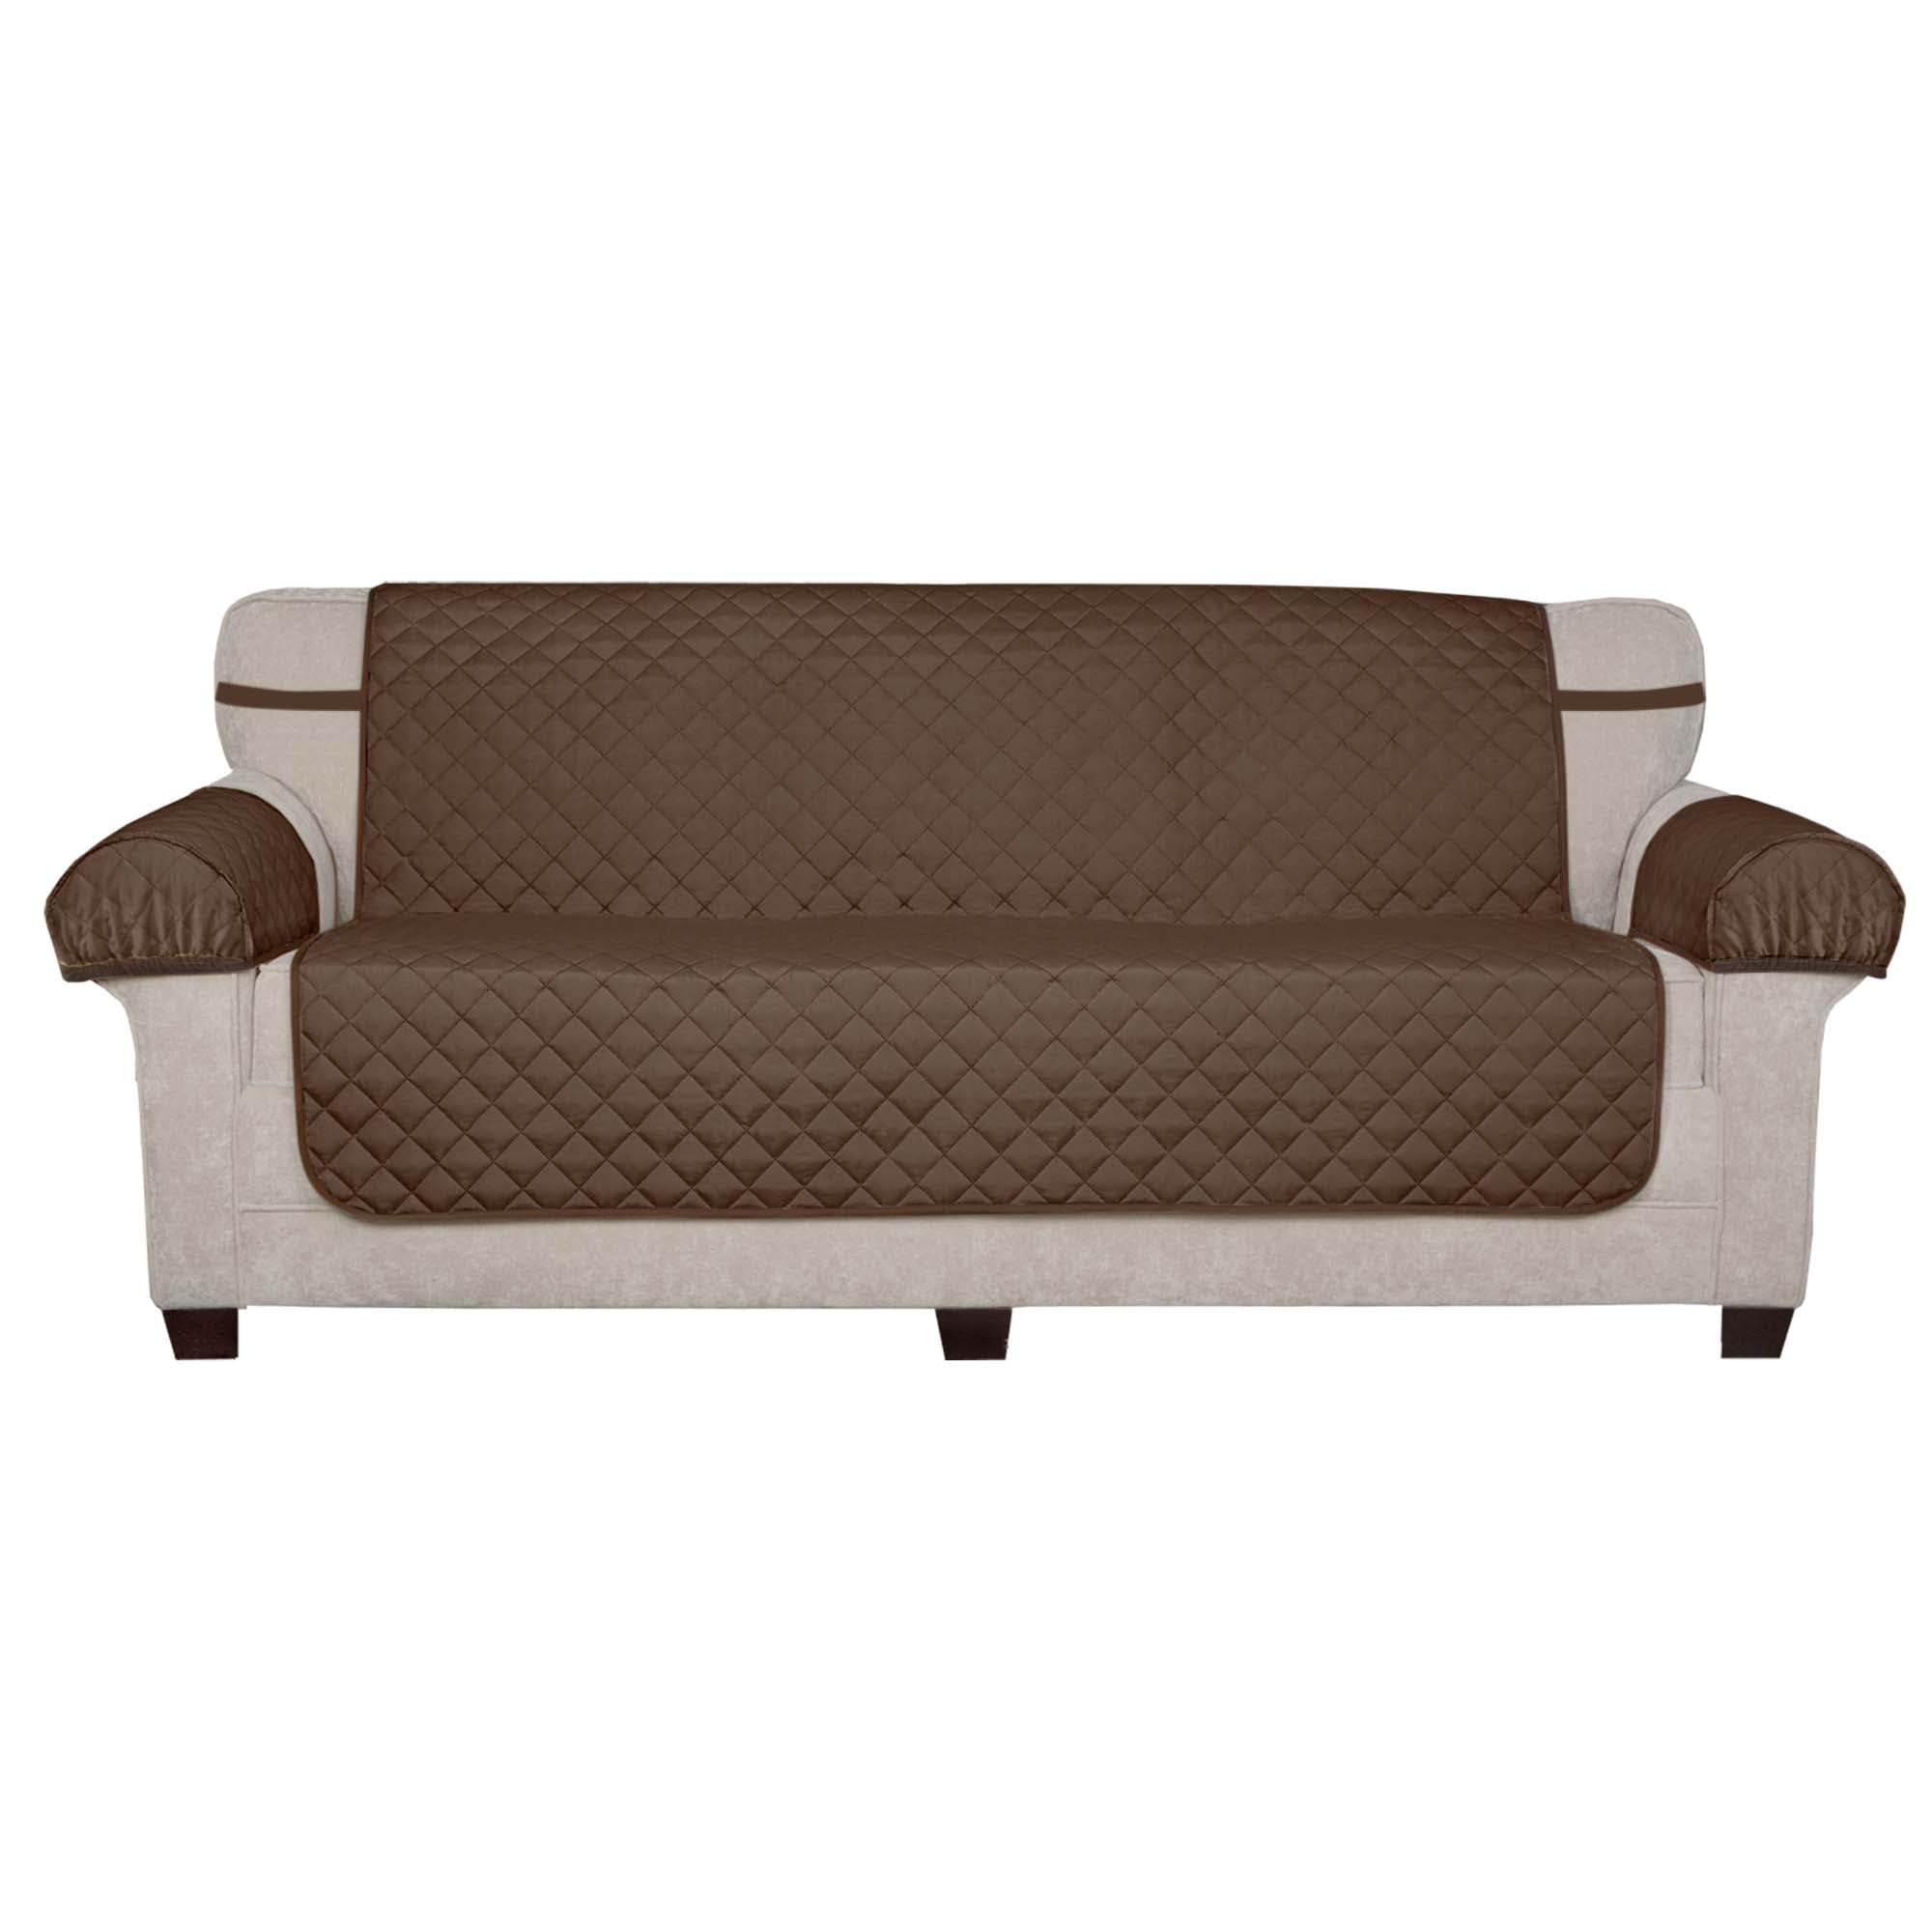 Quilted Sofa Cover Protector Microfiber Furniture Cover Black Sofa Futon Fabric 